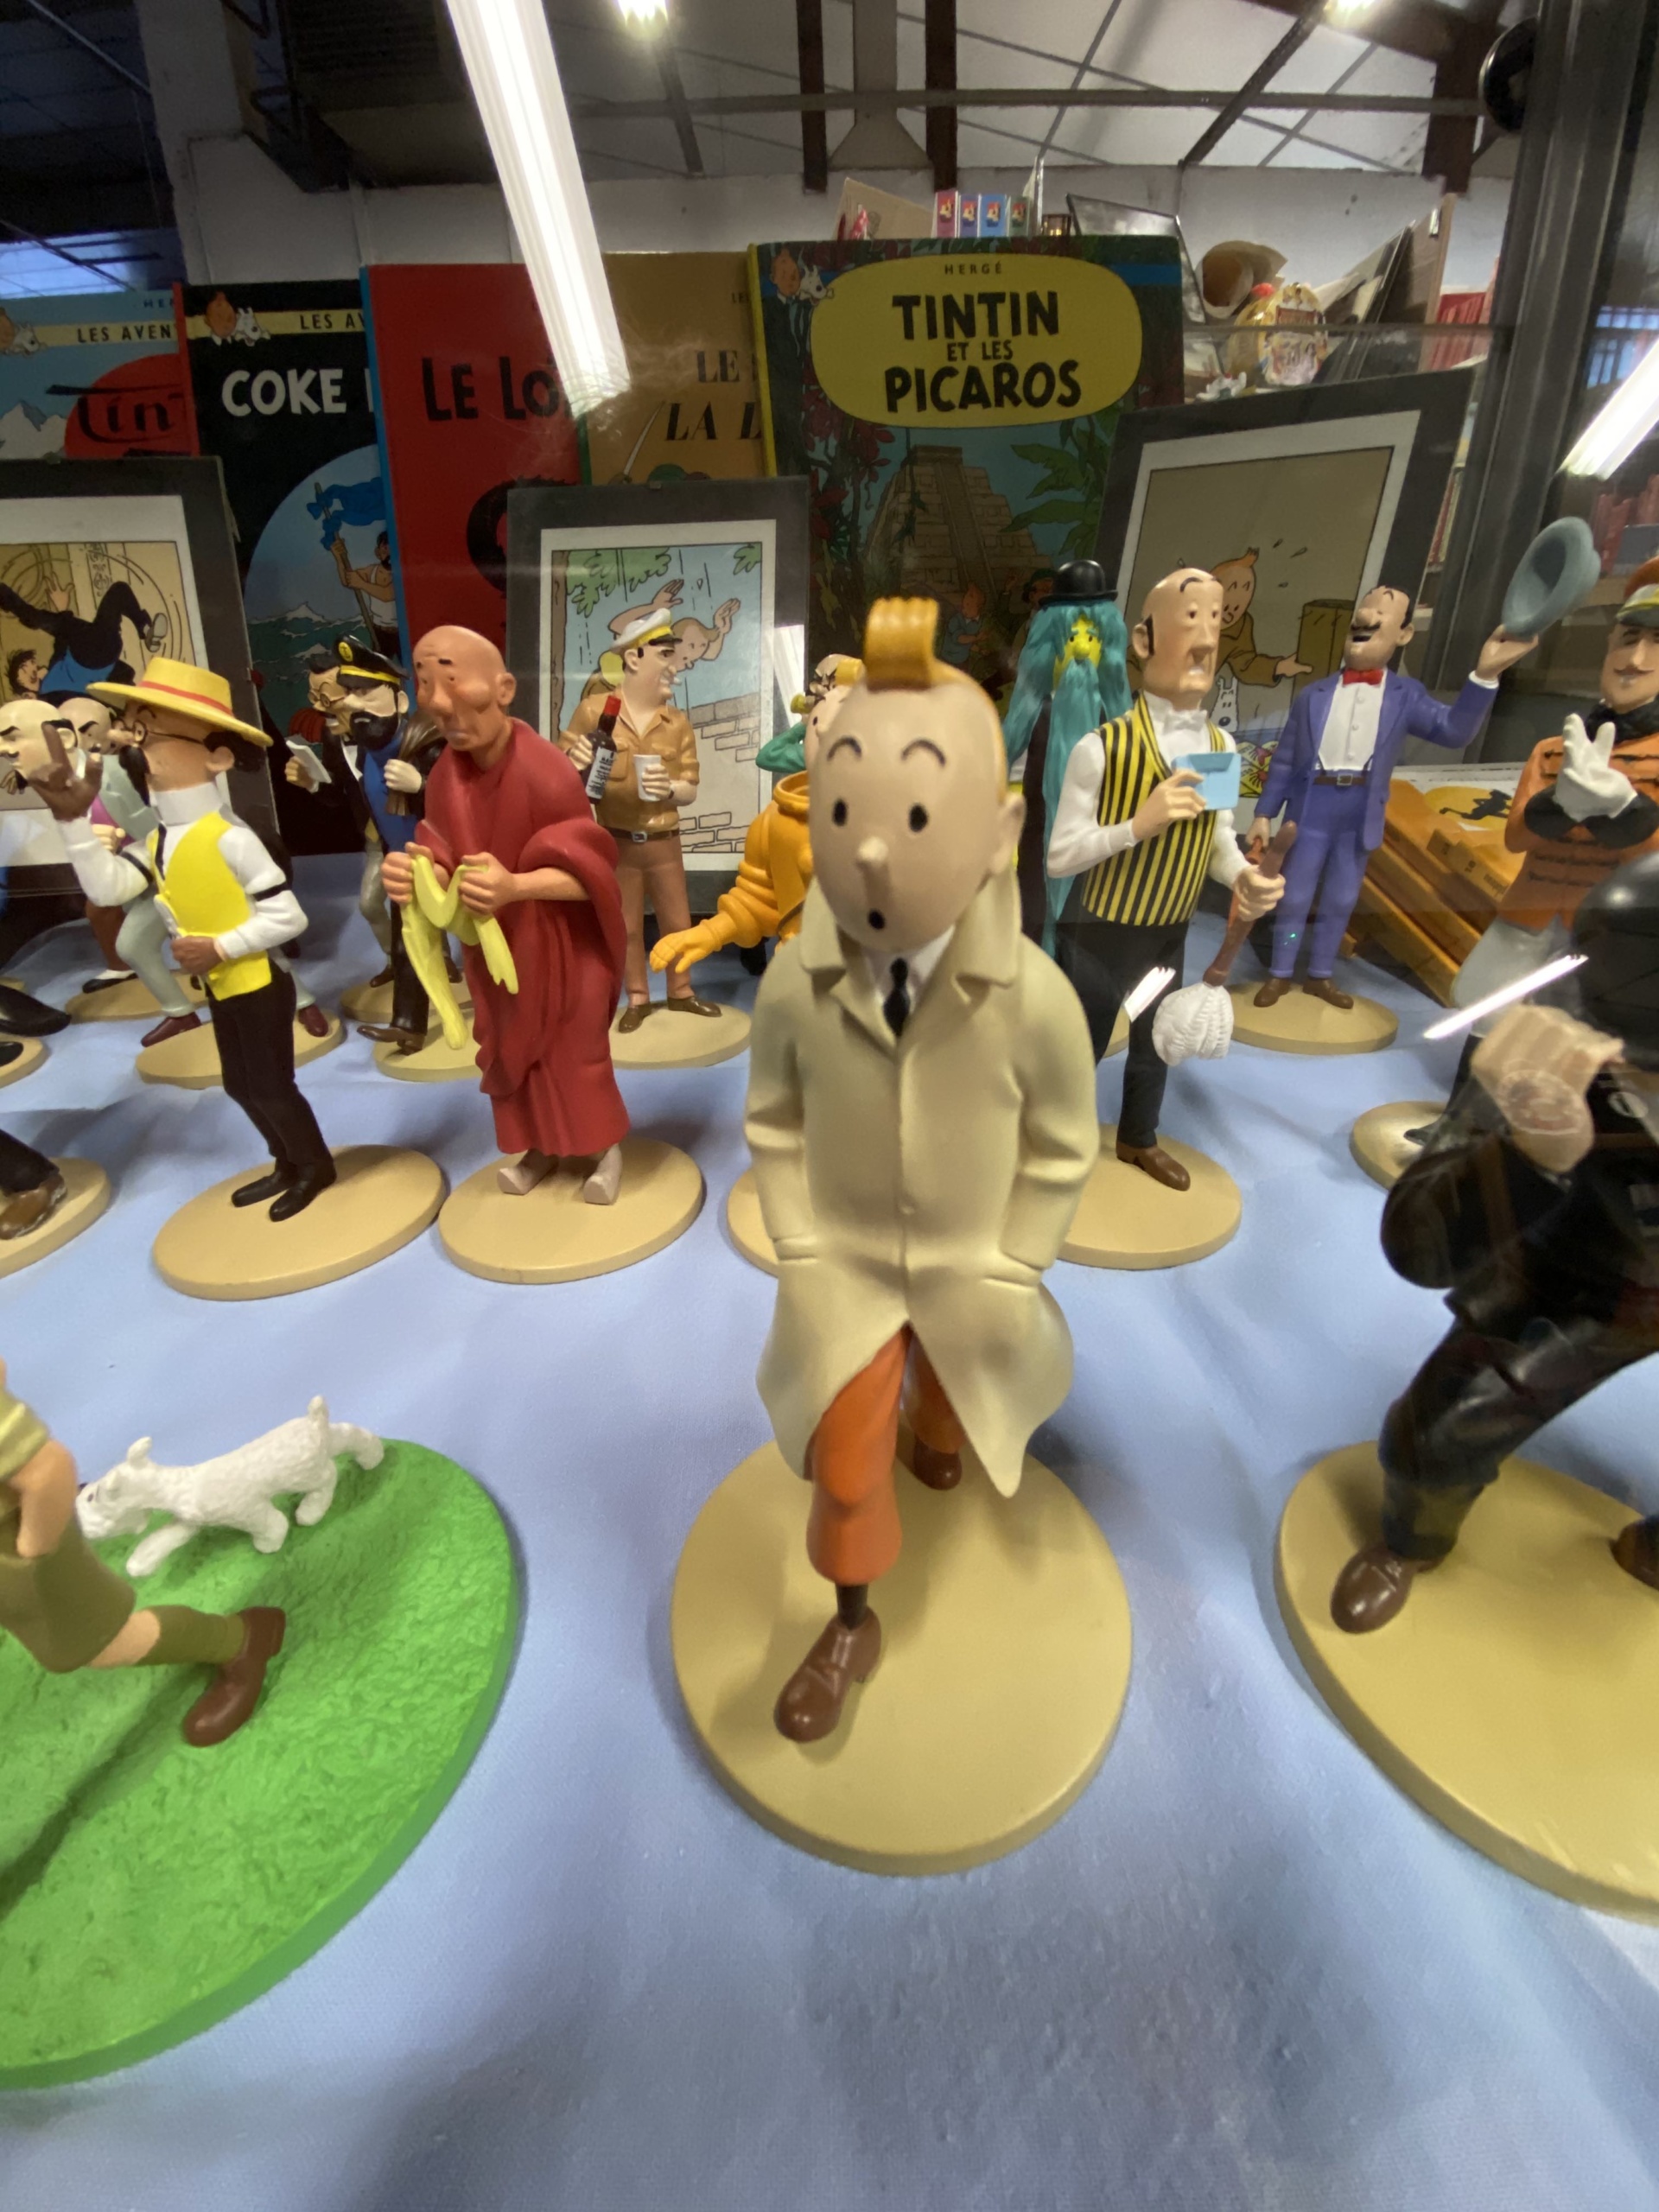 Lot de figurines et BD Tintin